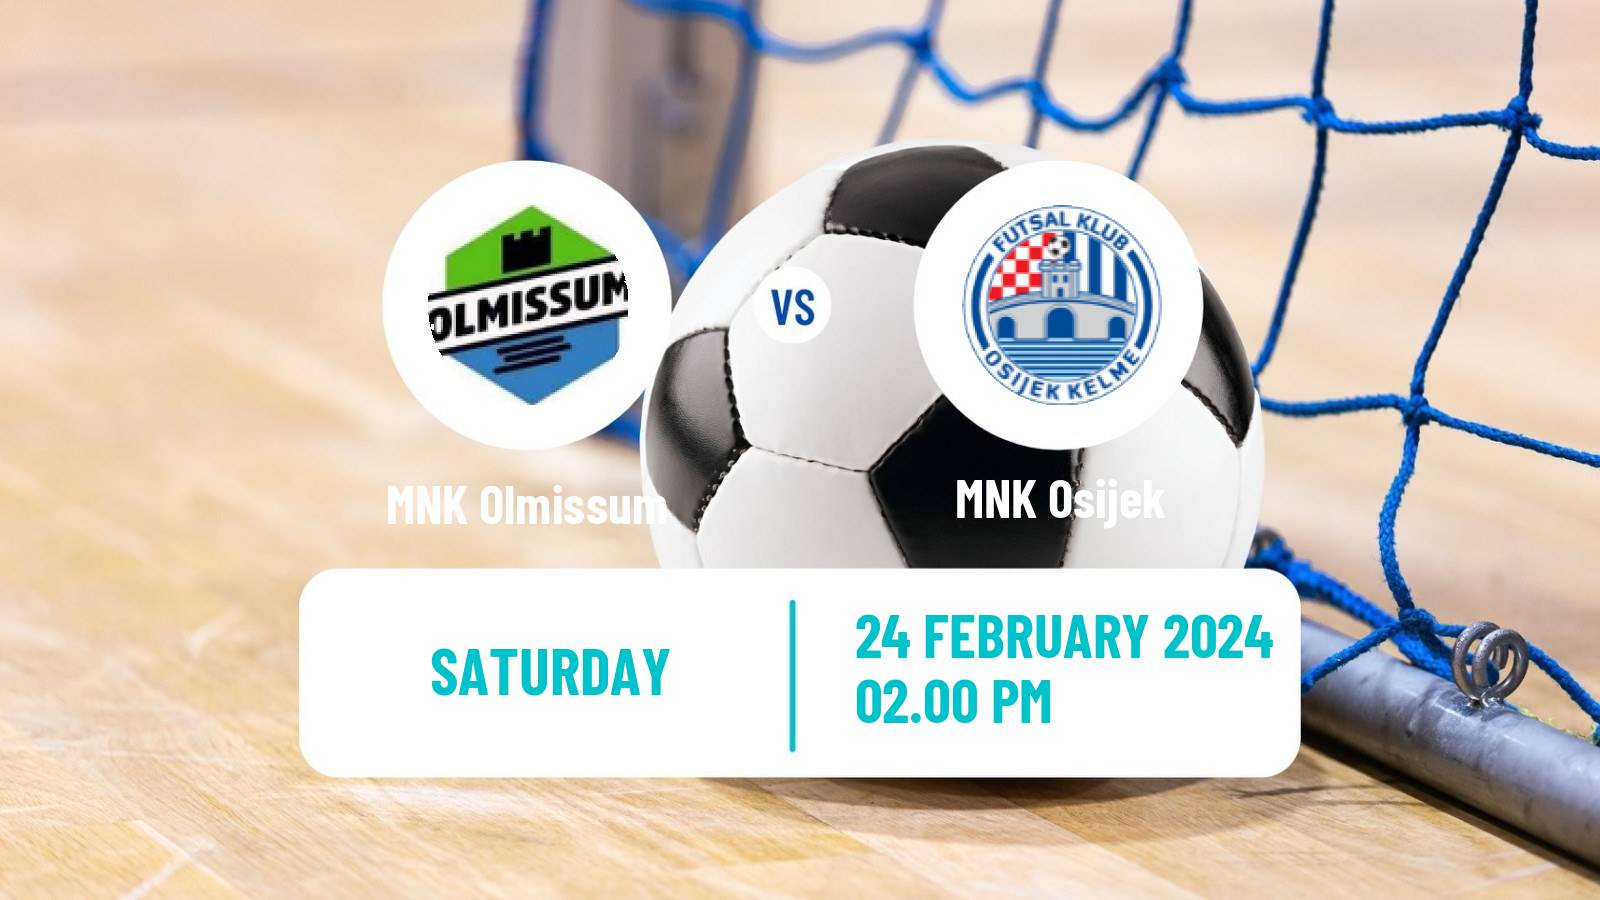 Futsal Croatian 1 HMNL Olmissum - Osijek